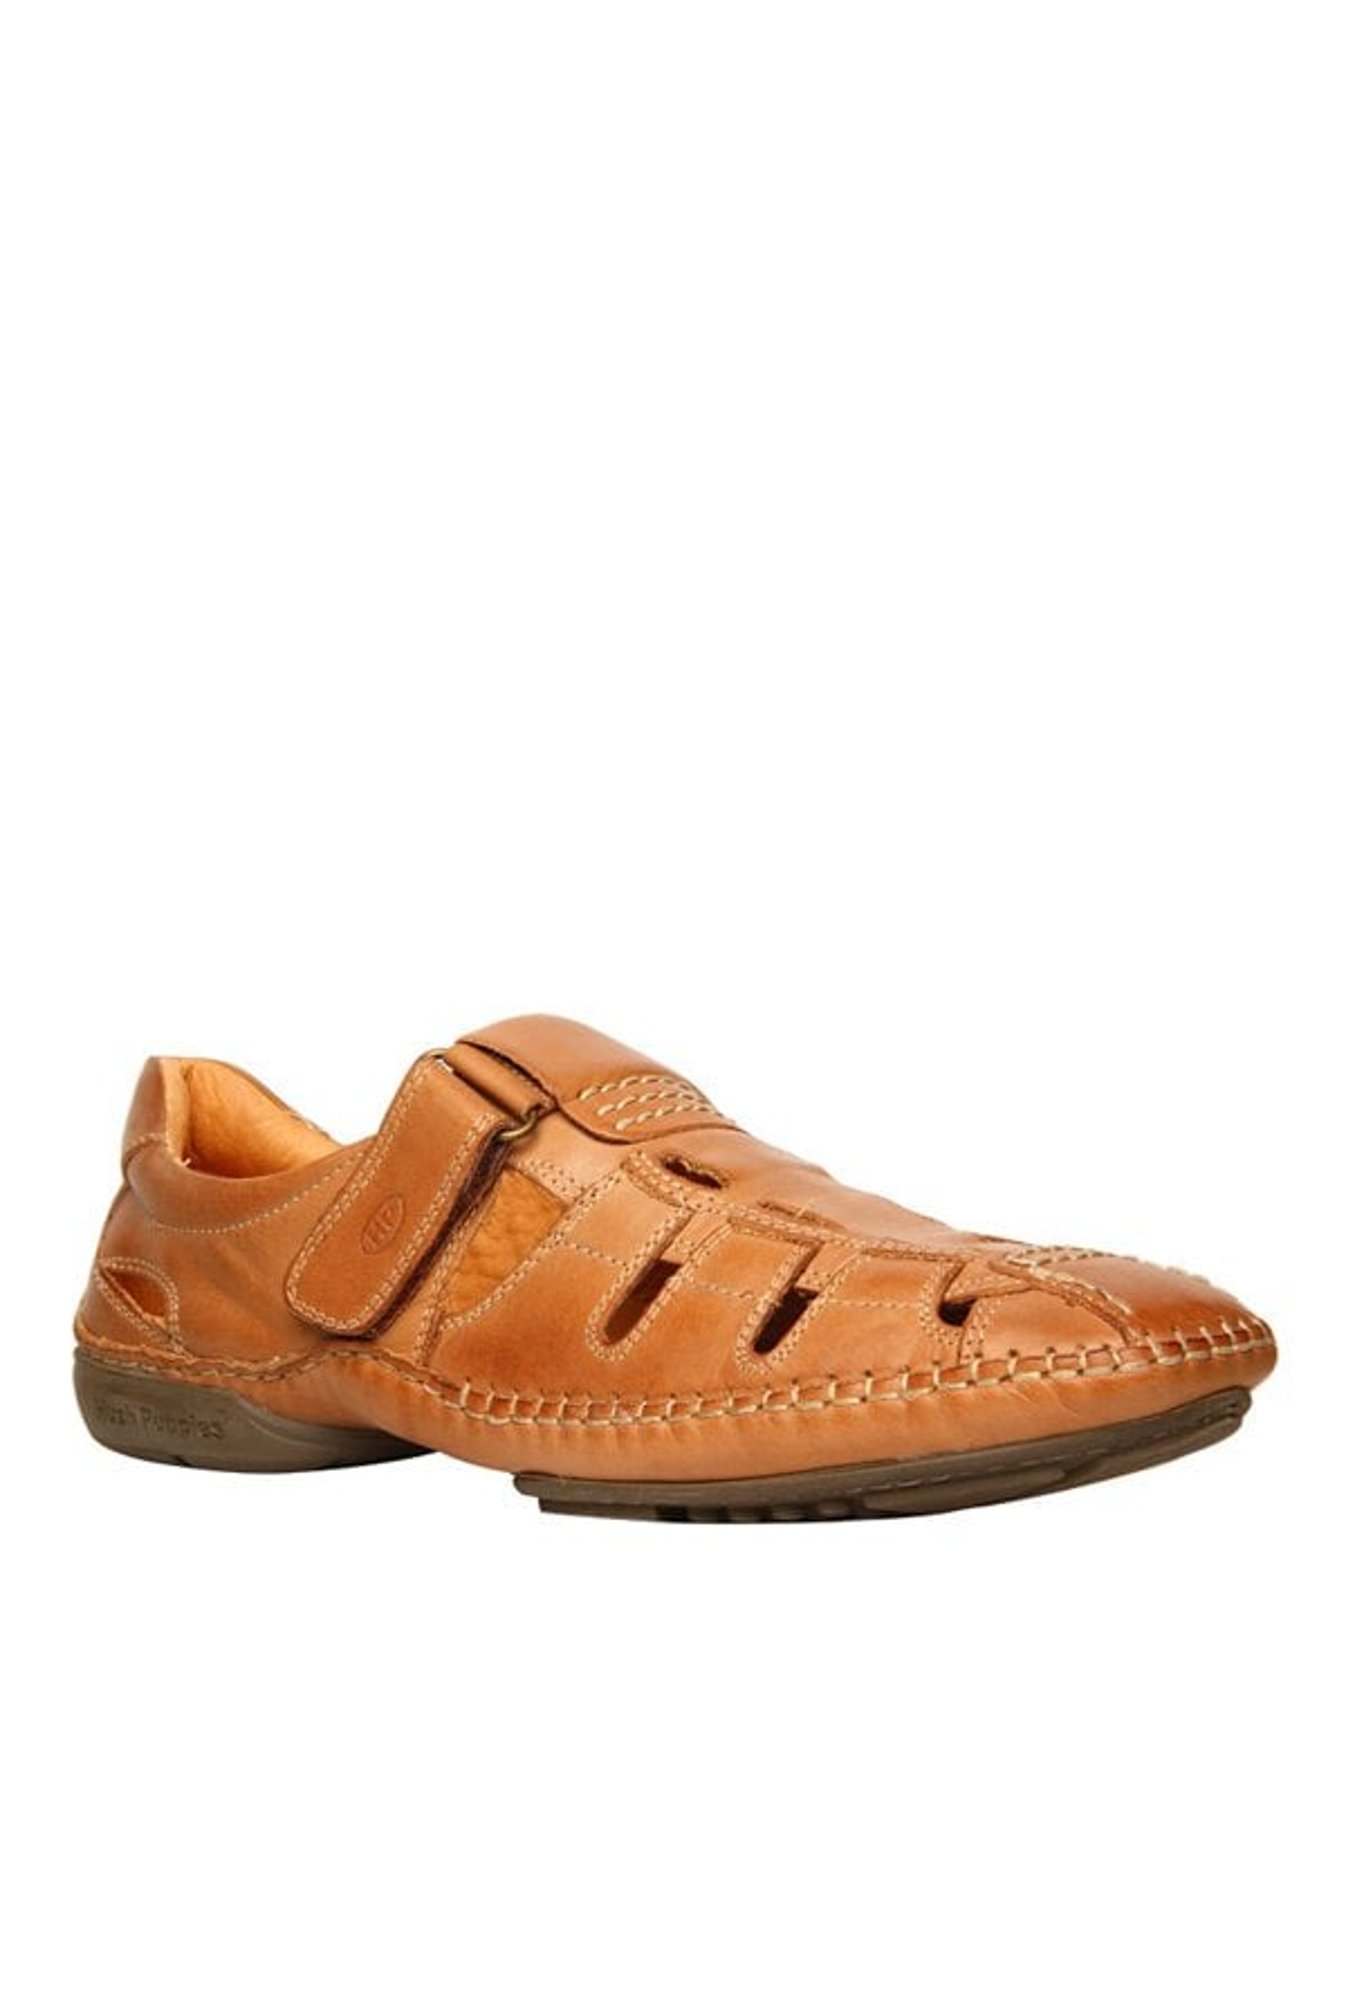 BATA Men MOODY SANDAL Tan Sandals, (8643218) UK 7 : Amazon.in: Fashion